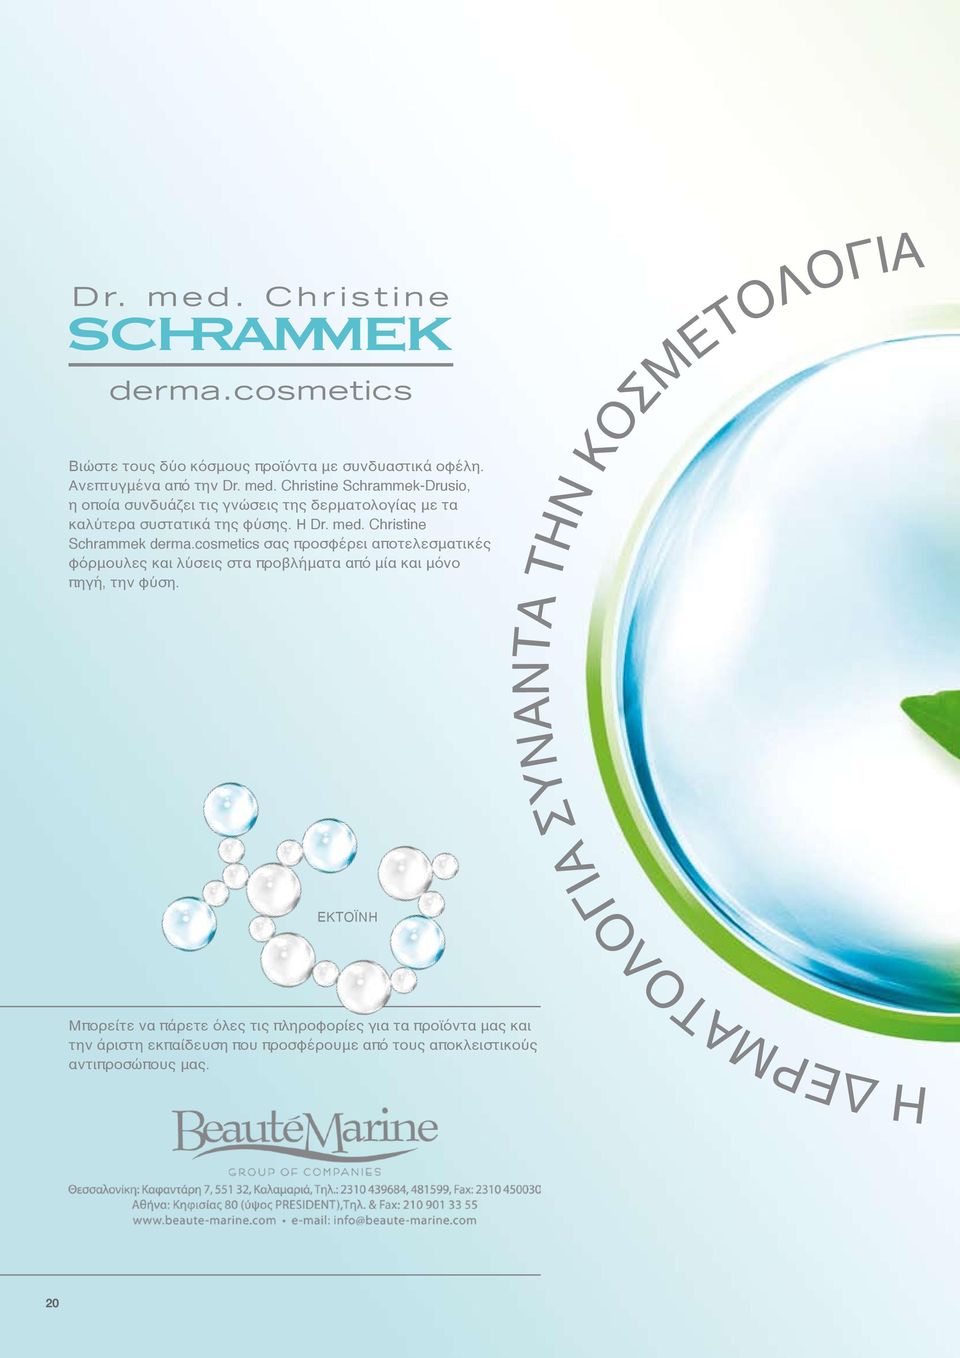 Christine Schrammek derma.cosmetics σας προσφέρει αποτελεσματικές φόρμουλες και λύσεις στα προβλήματα από μία και μόνο πηγή, την φύση.